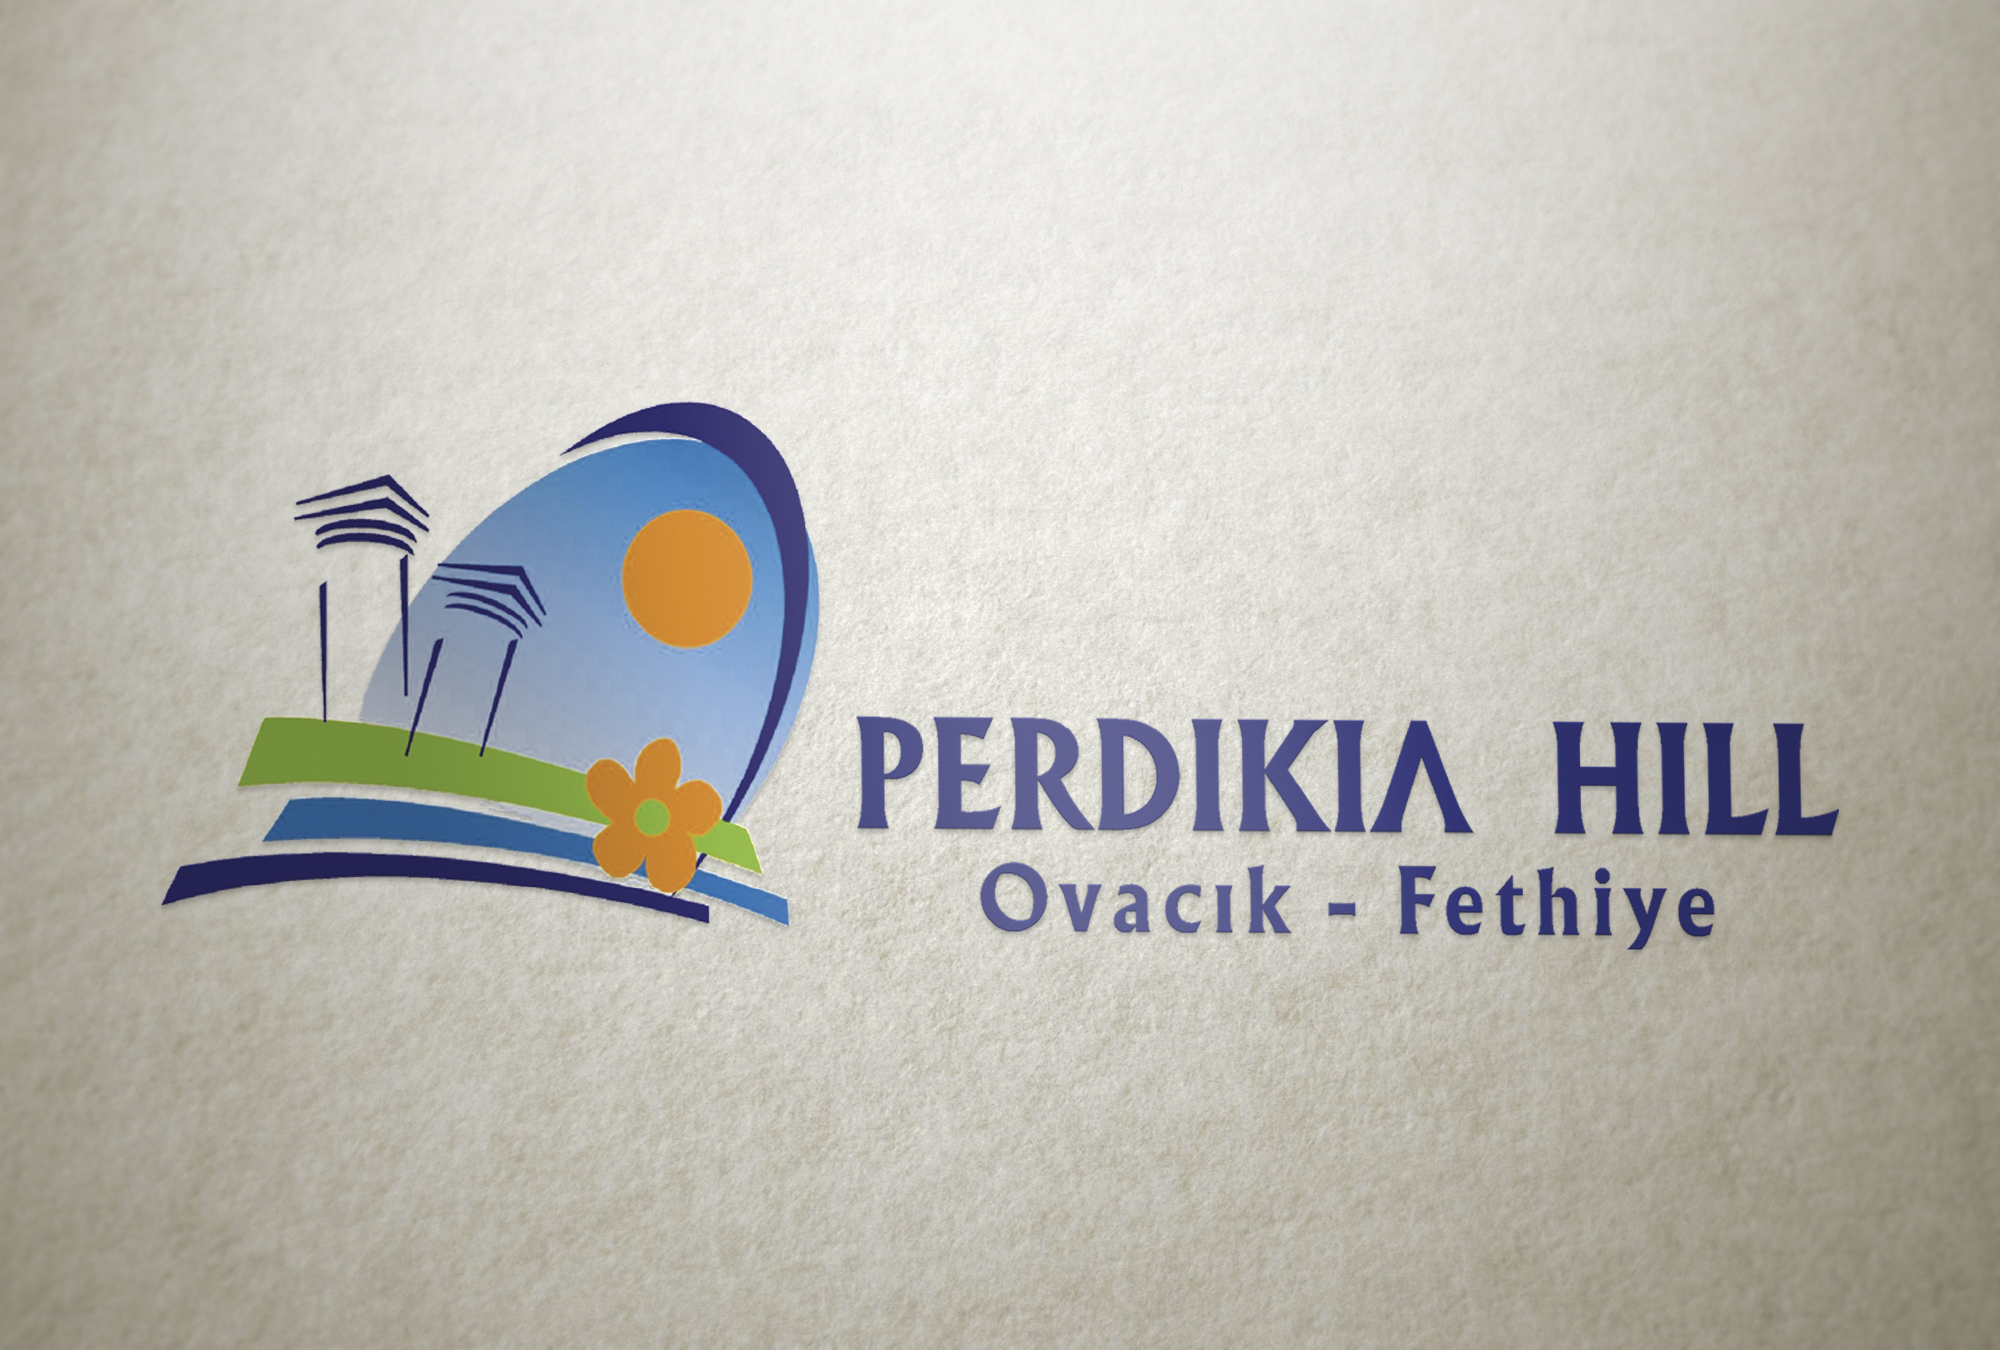 Perdikia Hill